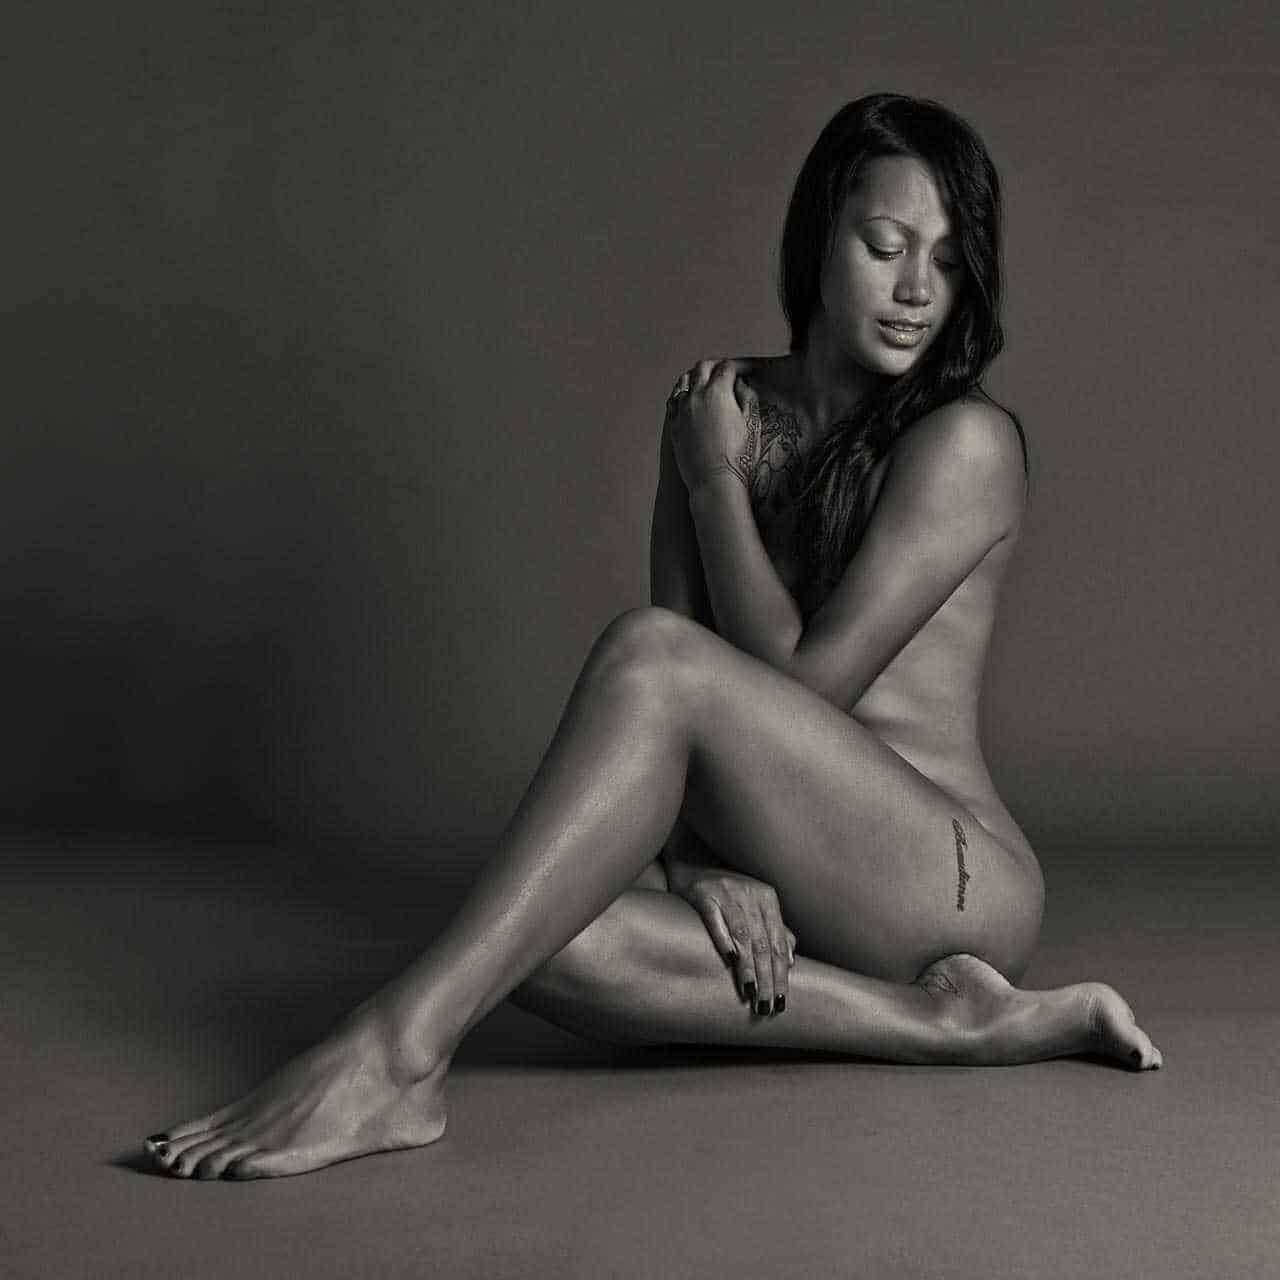 Nude Photography Auckland | Ilan Wittenberg Photographer